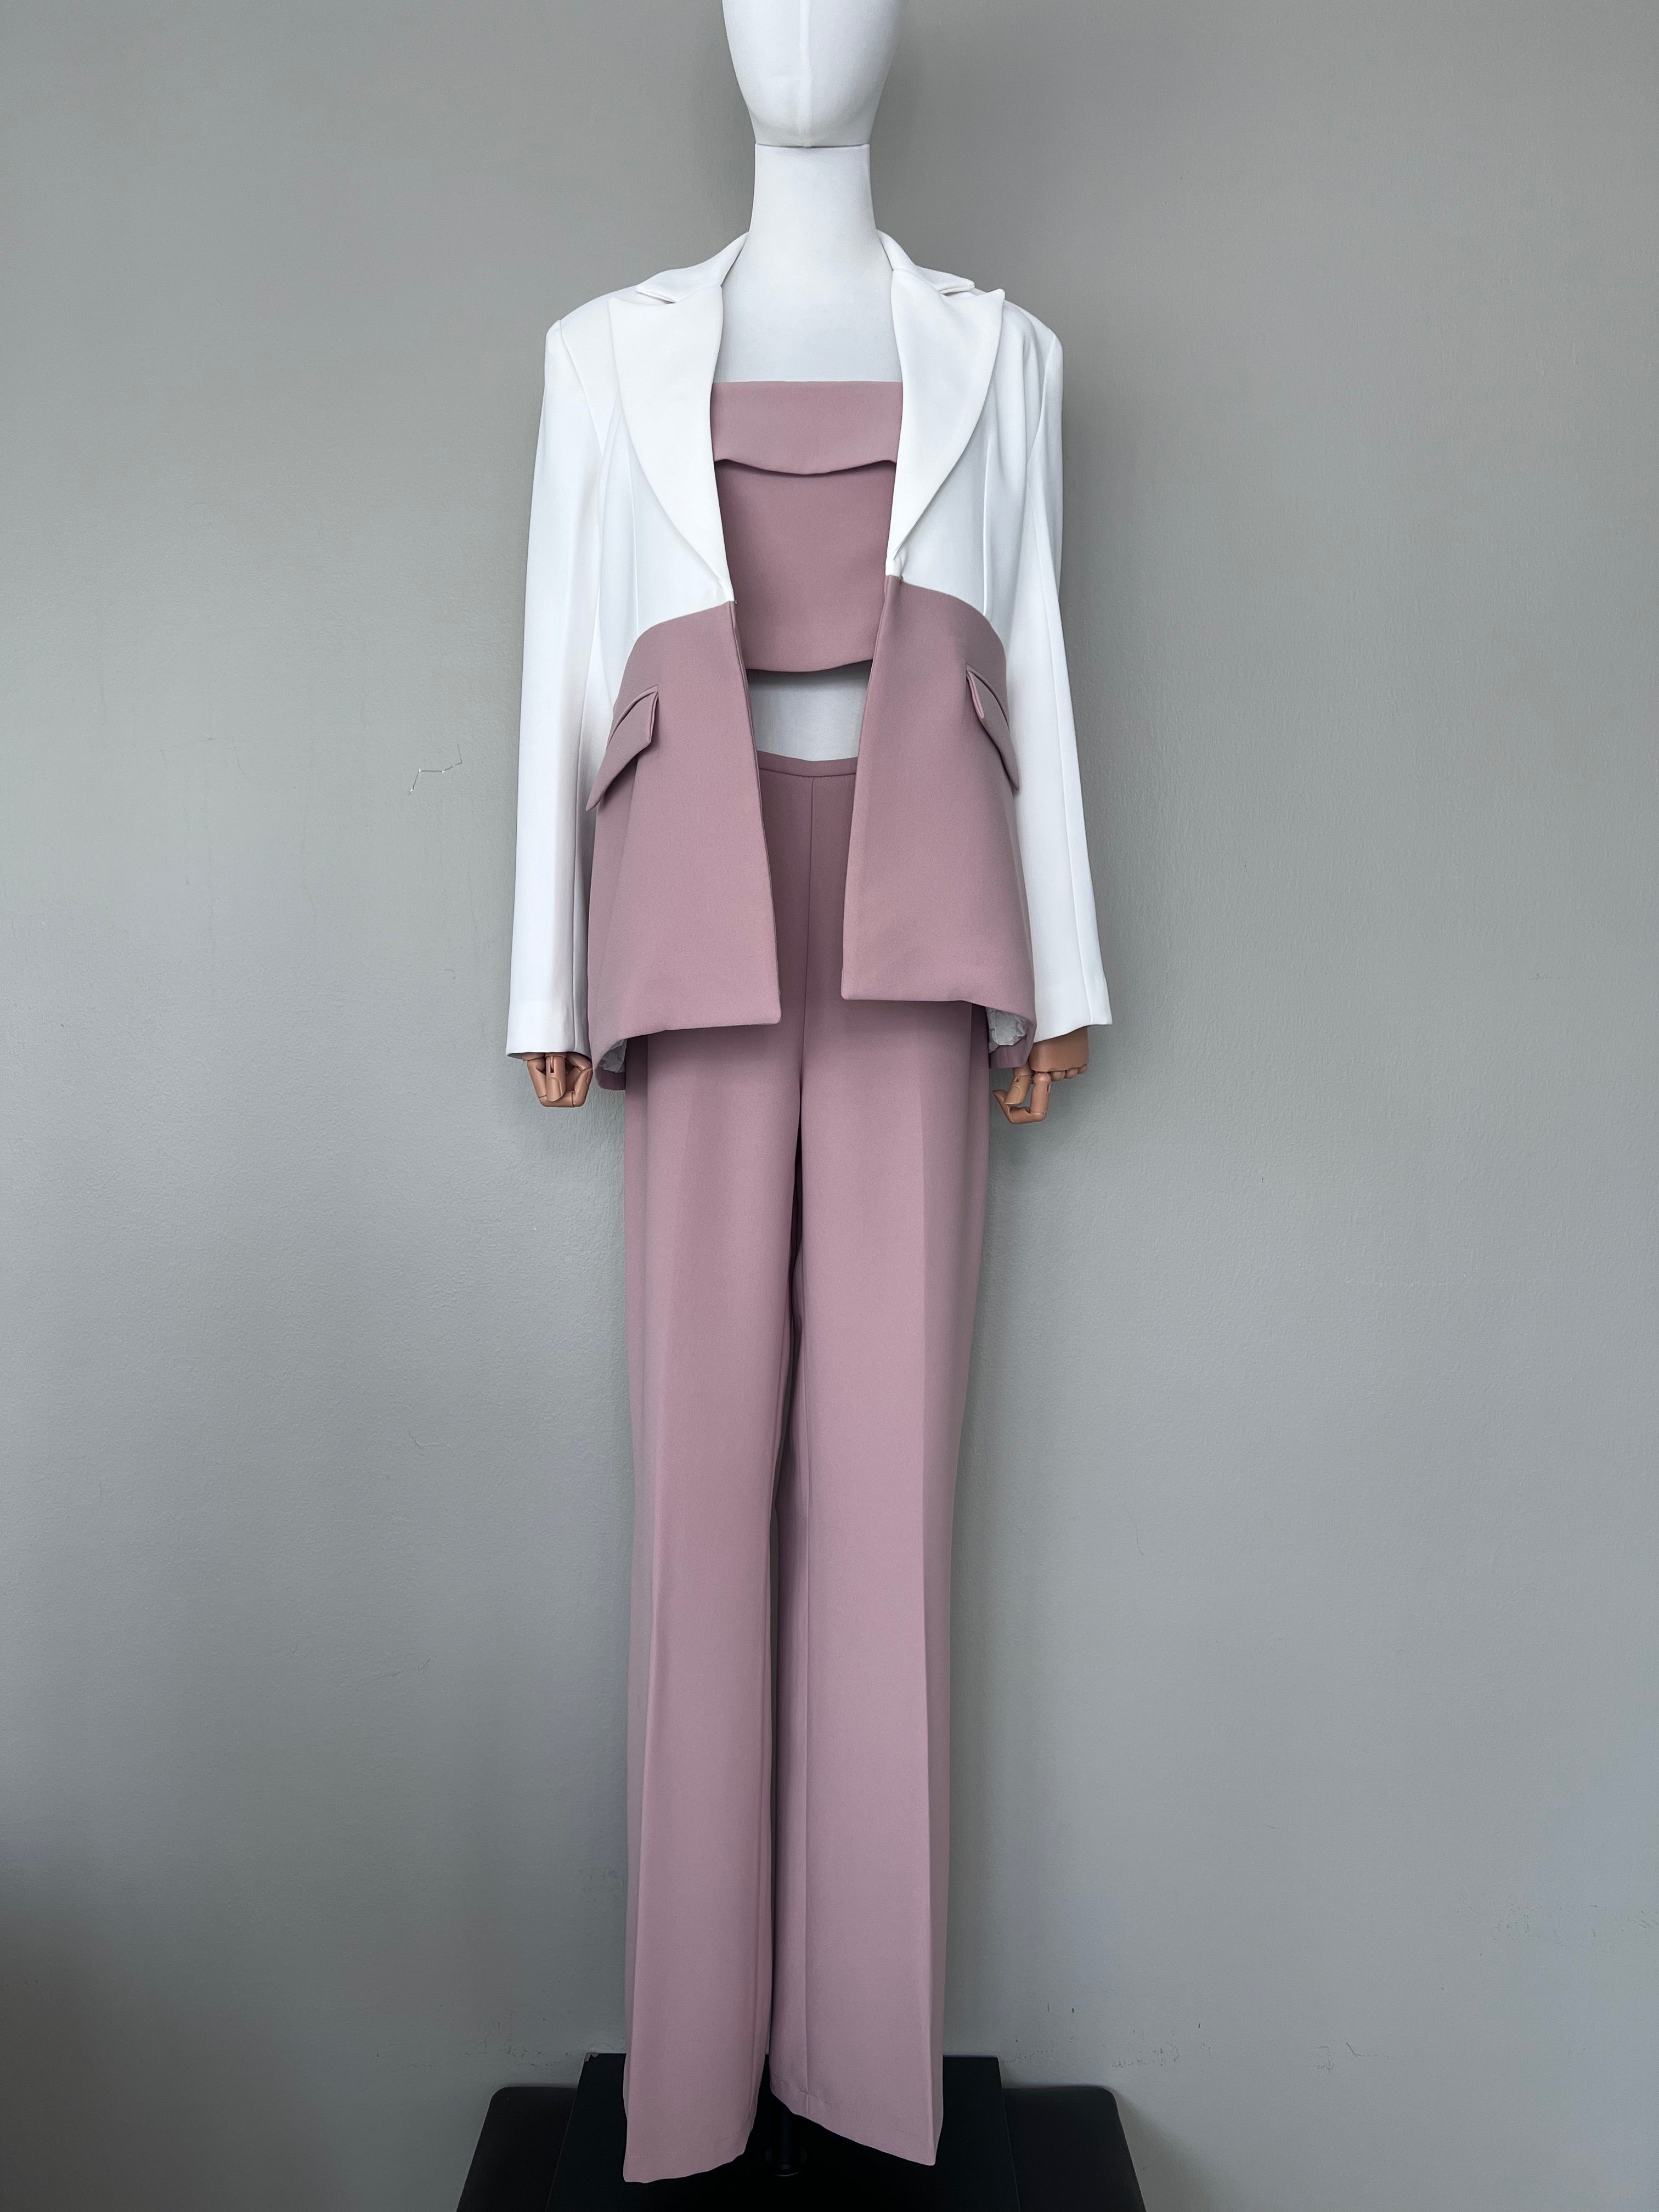 A set of Half white half pink modern blazer with pink dress pants - LES FOLIES DE SOPHIE